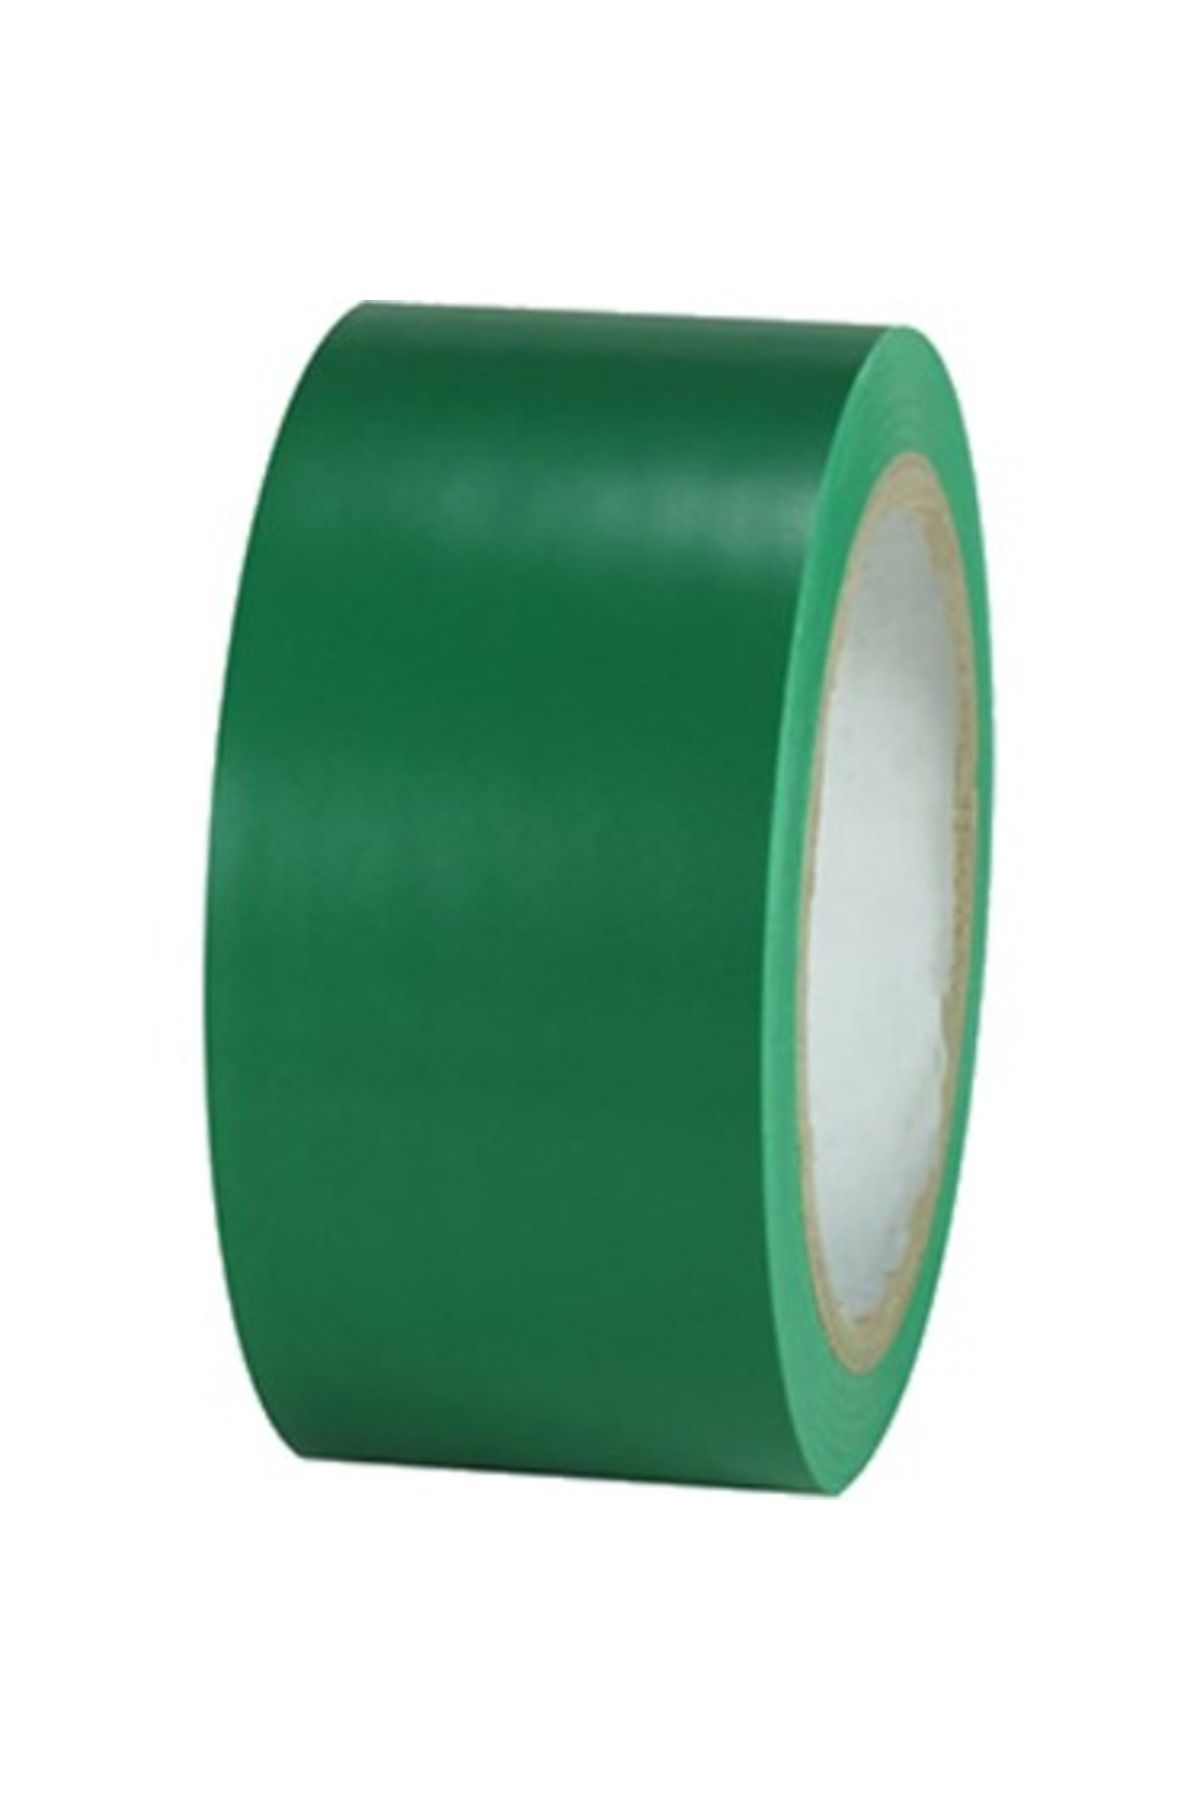 Noname Next Tape Renkli Koli Bandı 45mmx25m Yeşil